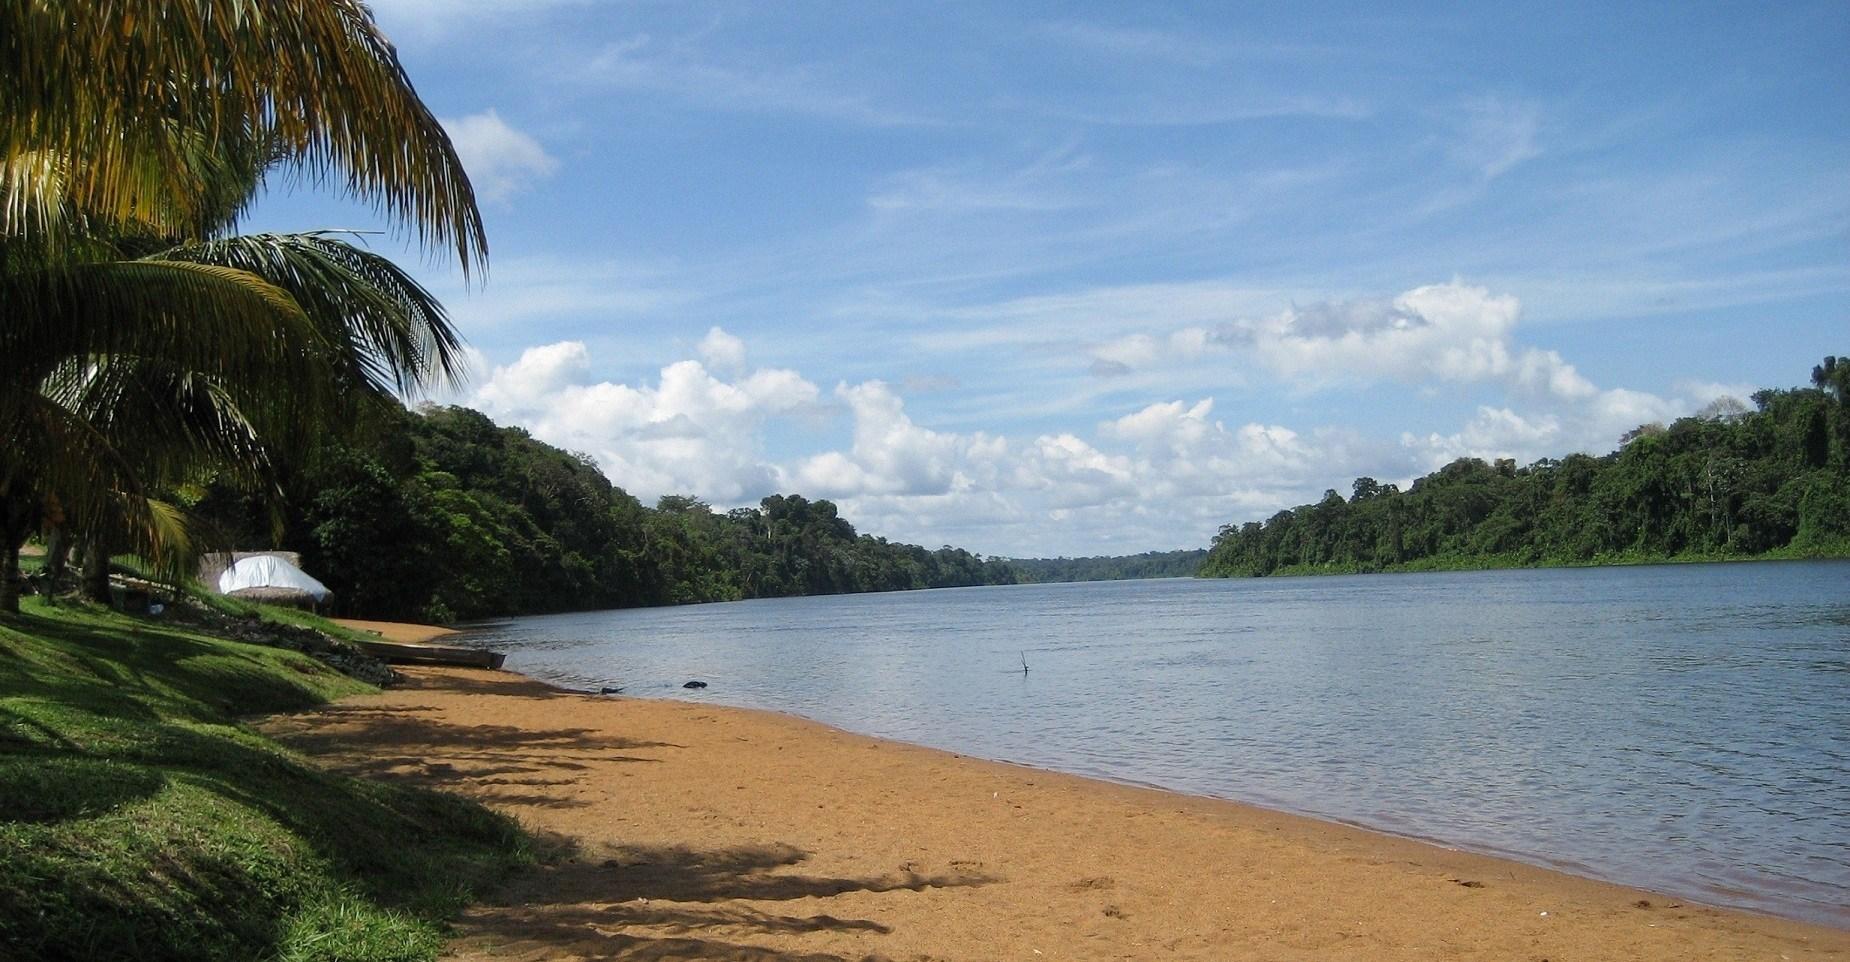 River and Tropical Coas in Suriname Wallpaper